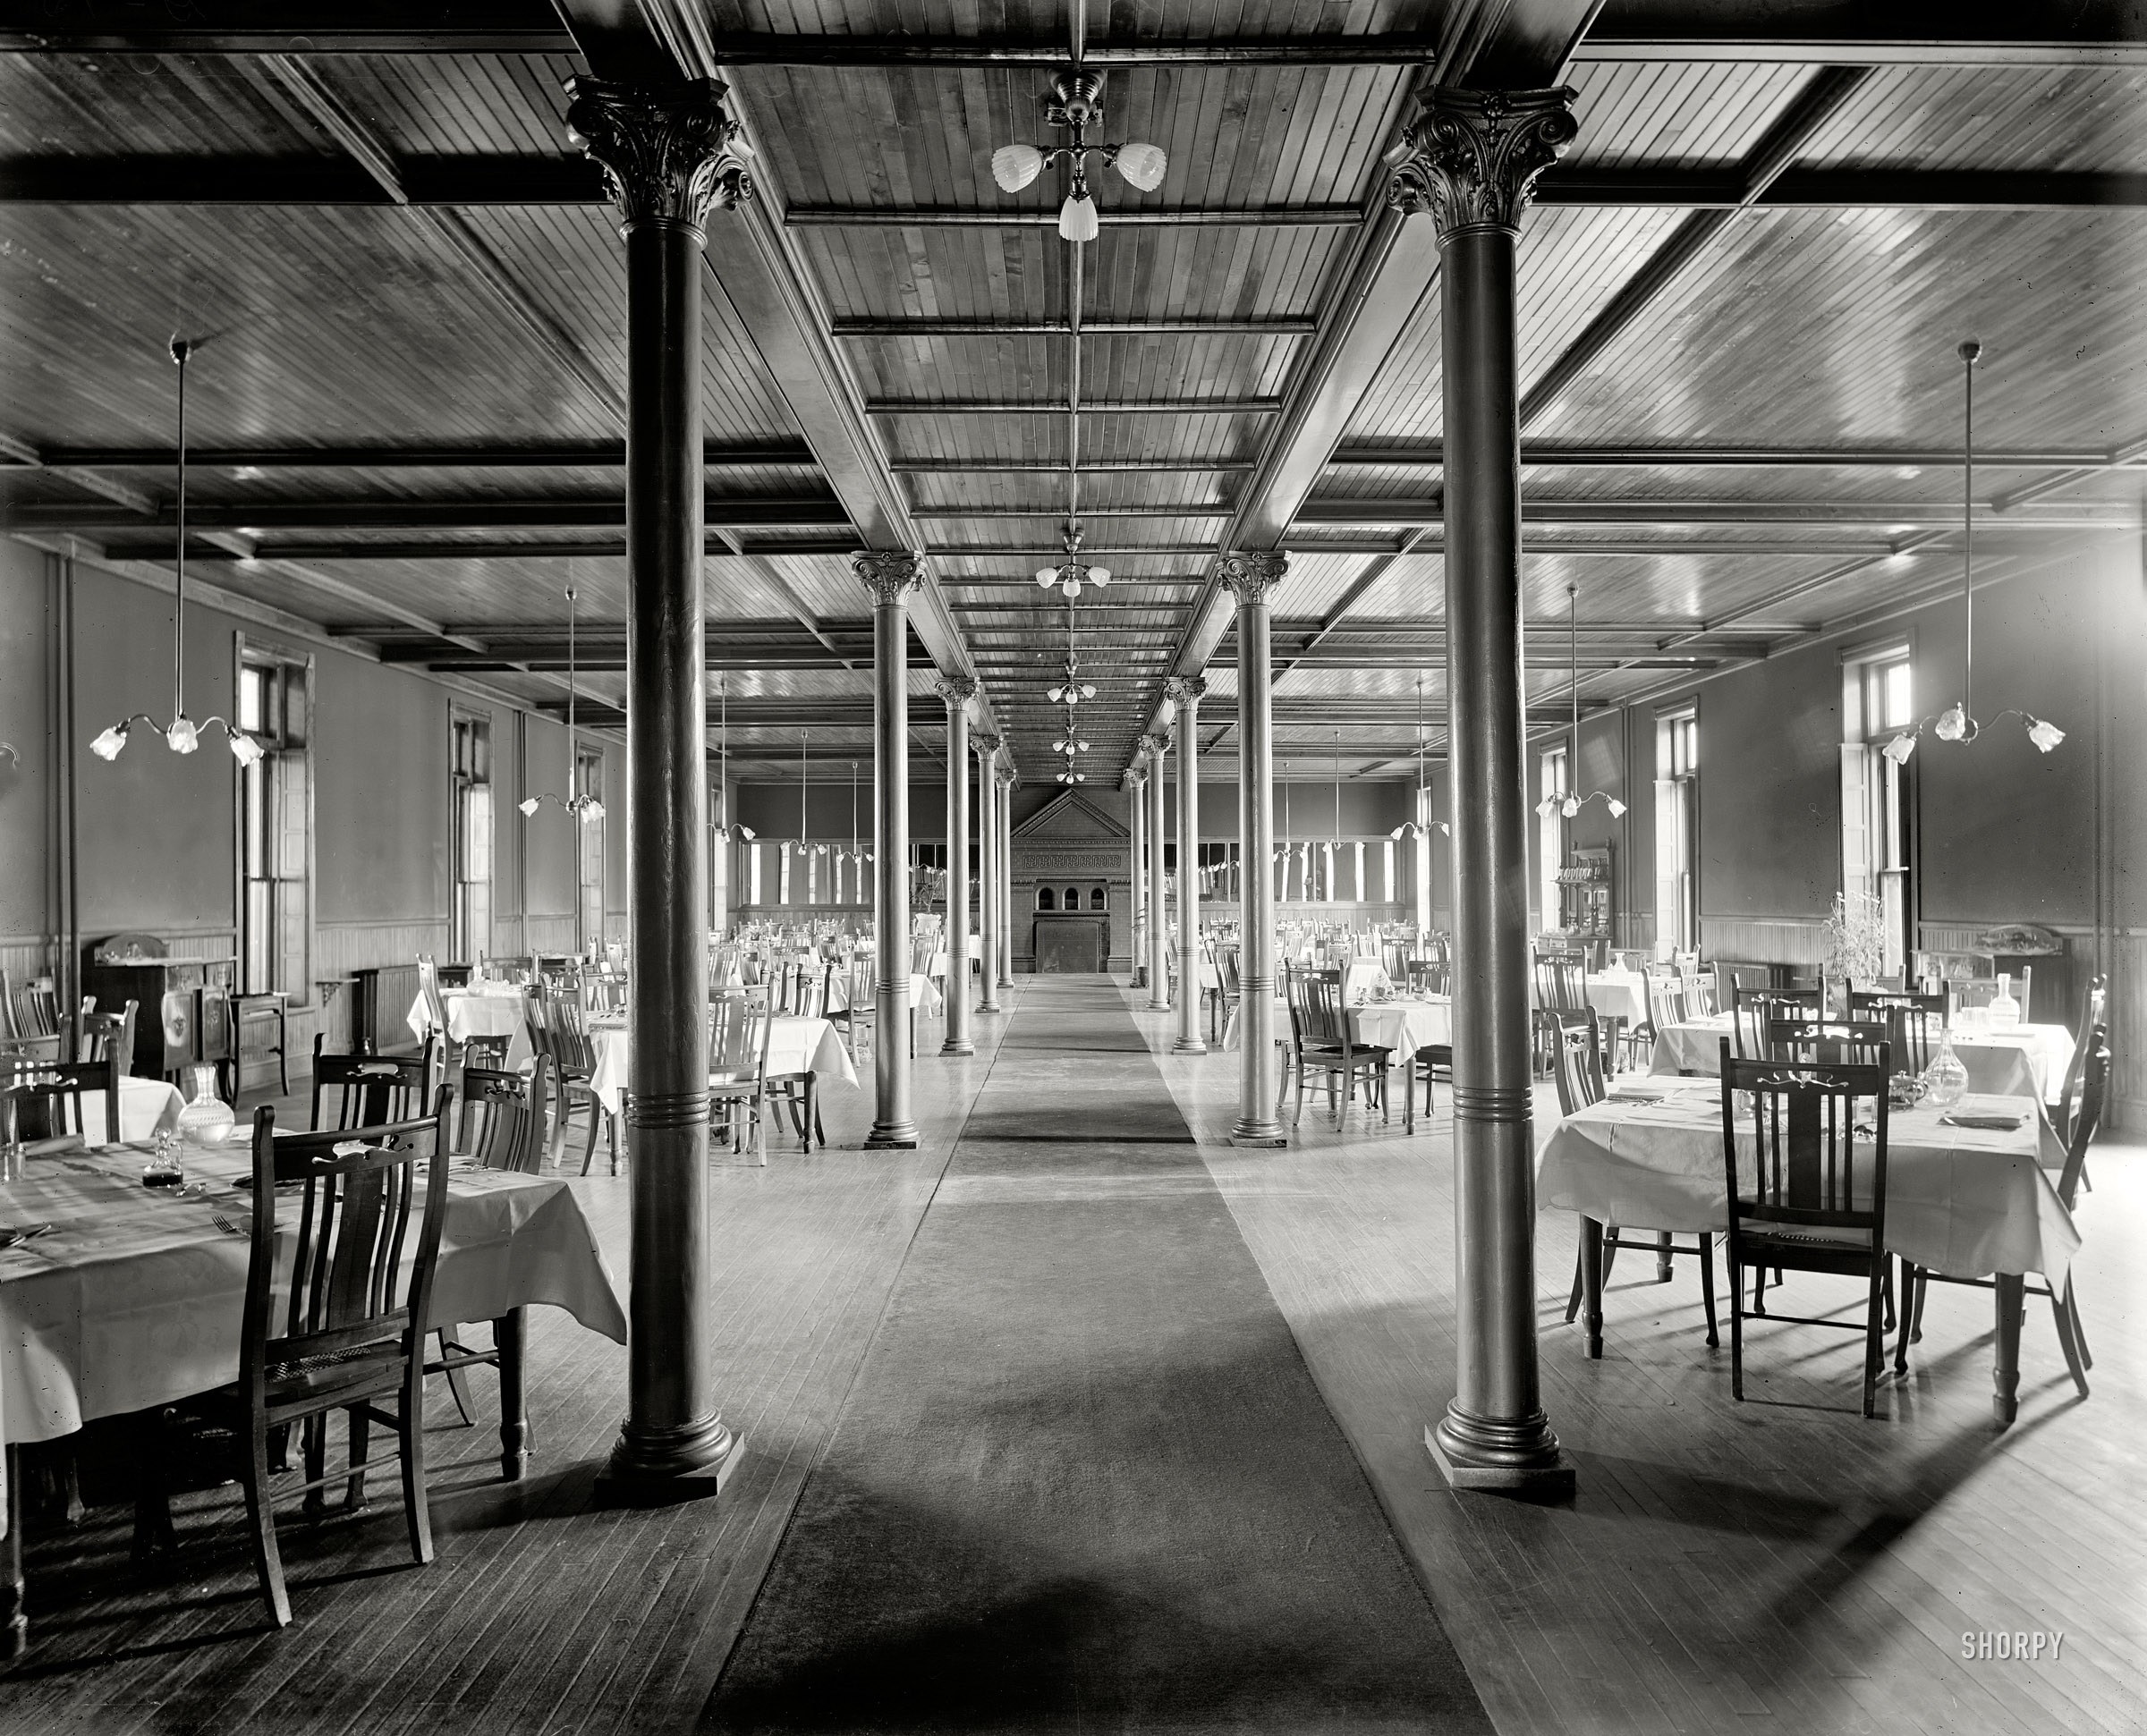 Alma, Michigan, circa 1905. "Alma Sanitarium dining room." 8x10 inch dry plate glass negative, Detroit Publishing Company. View full size.